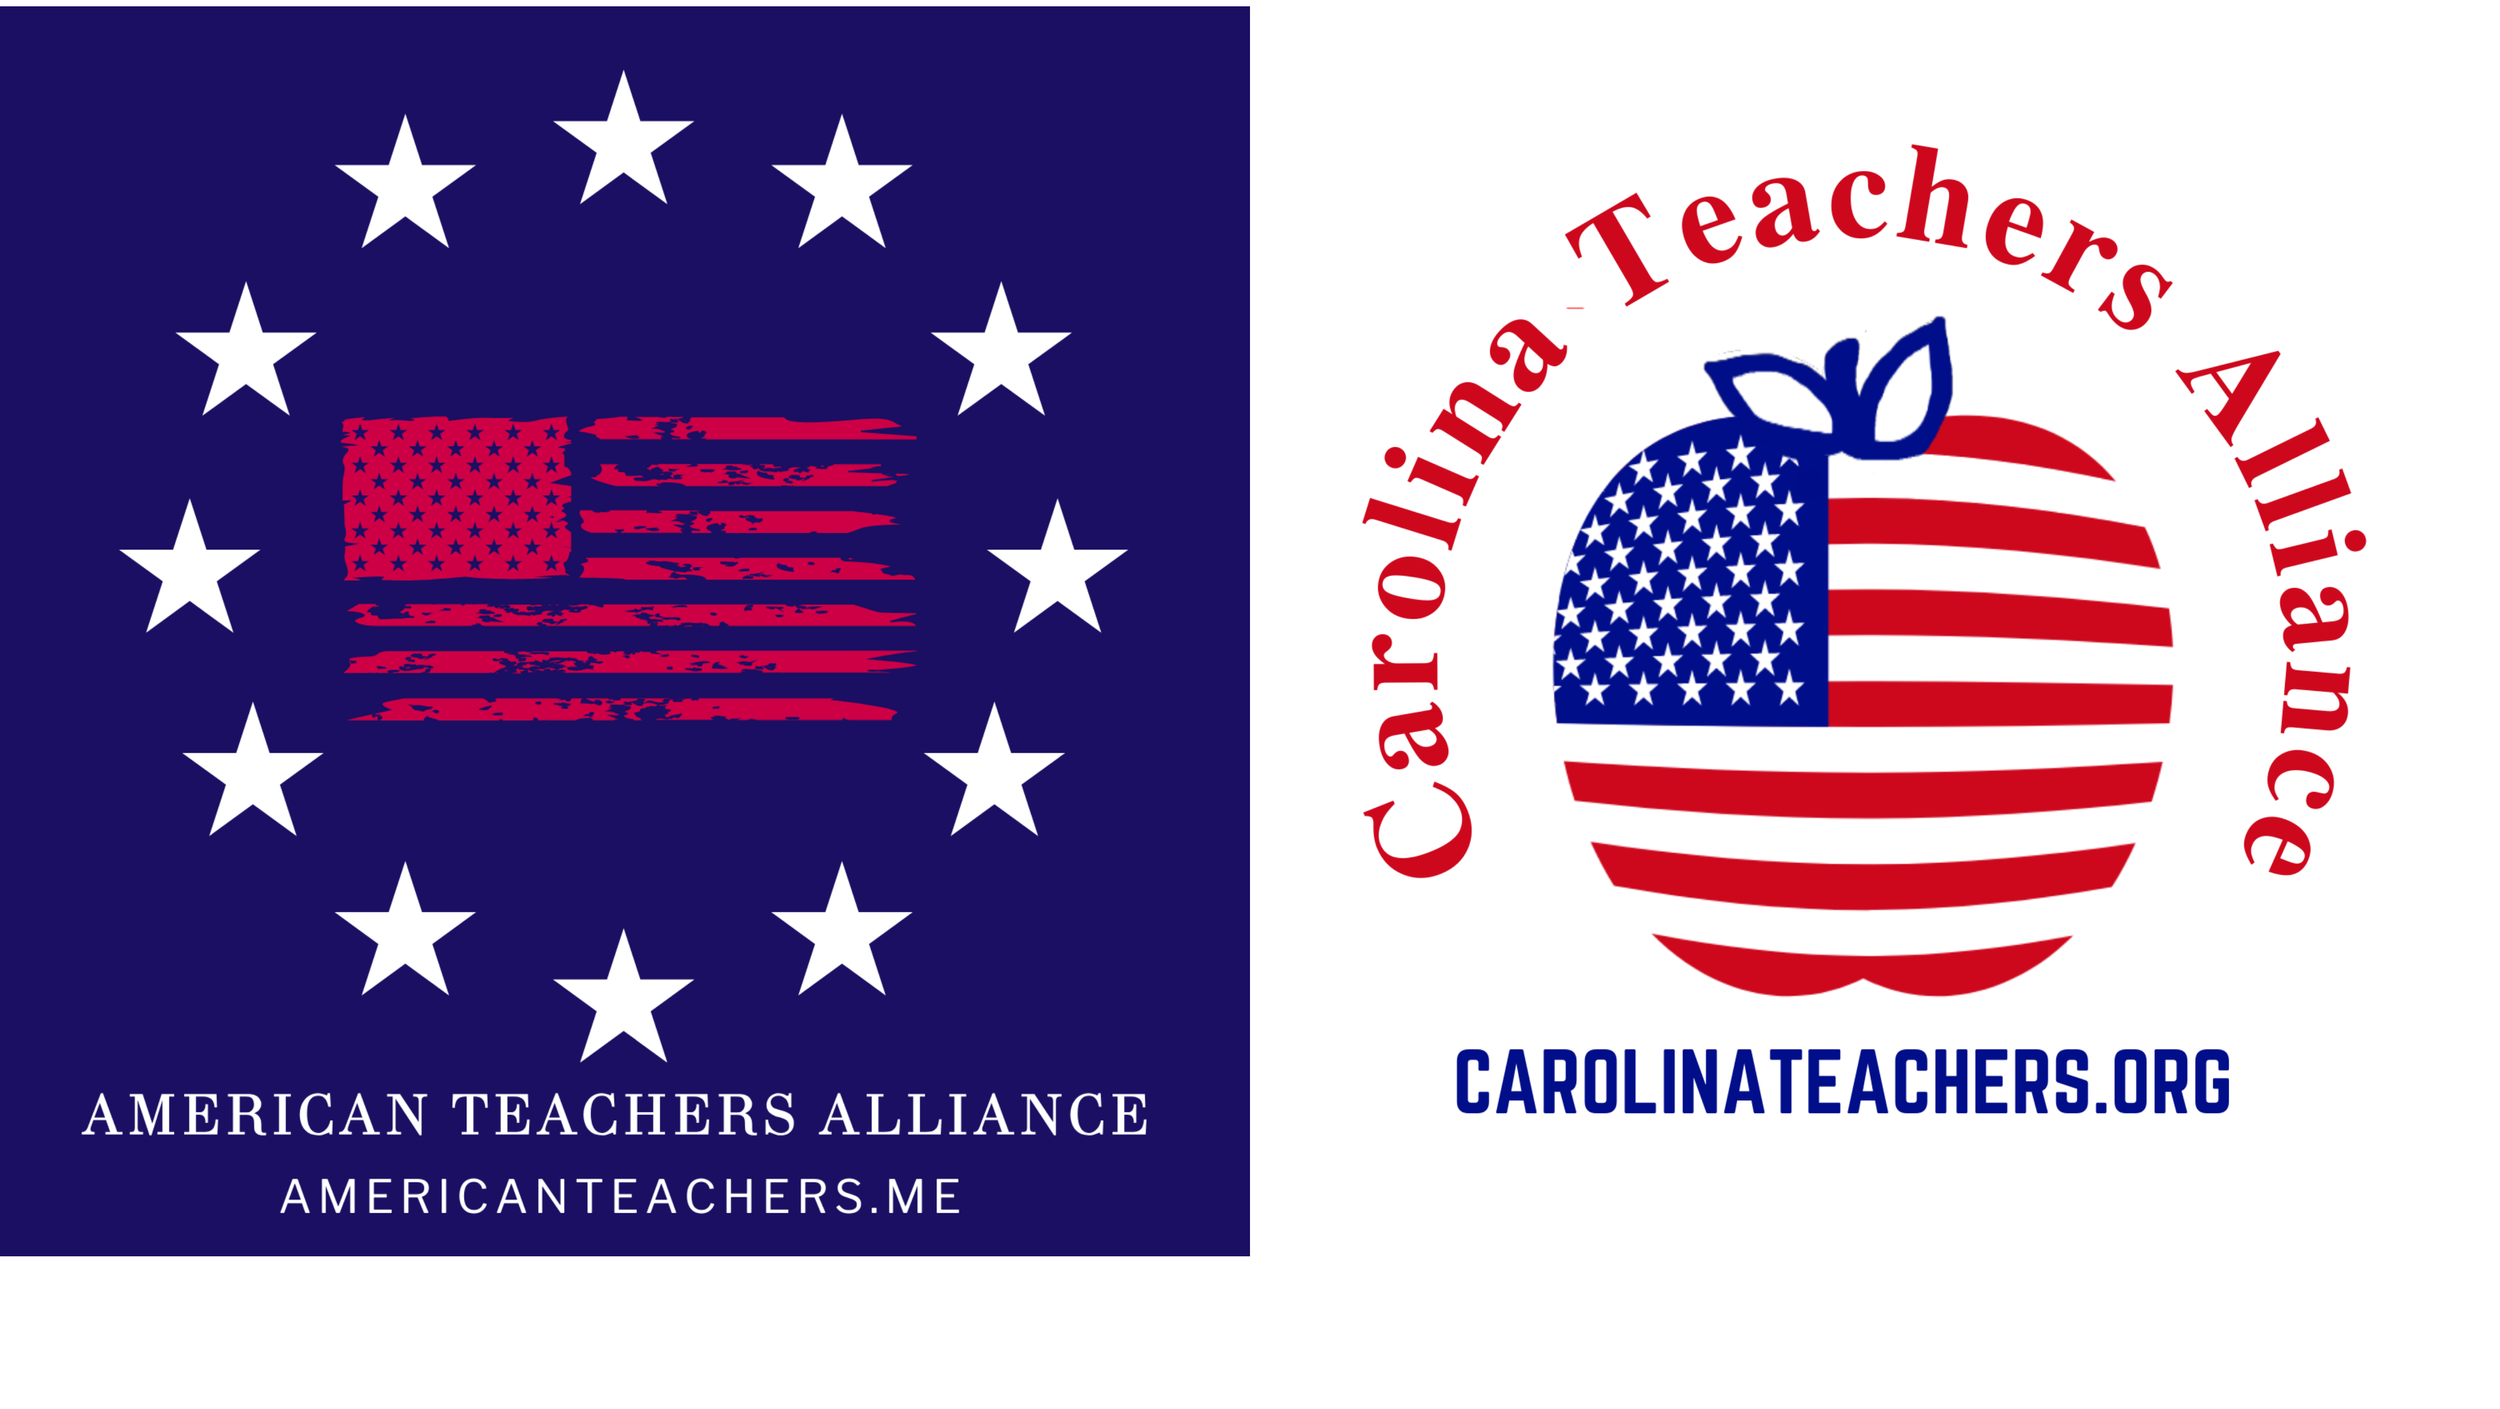 Carolina Teachers Alliance American Teachers Alliance American Tutors